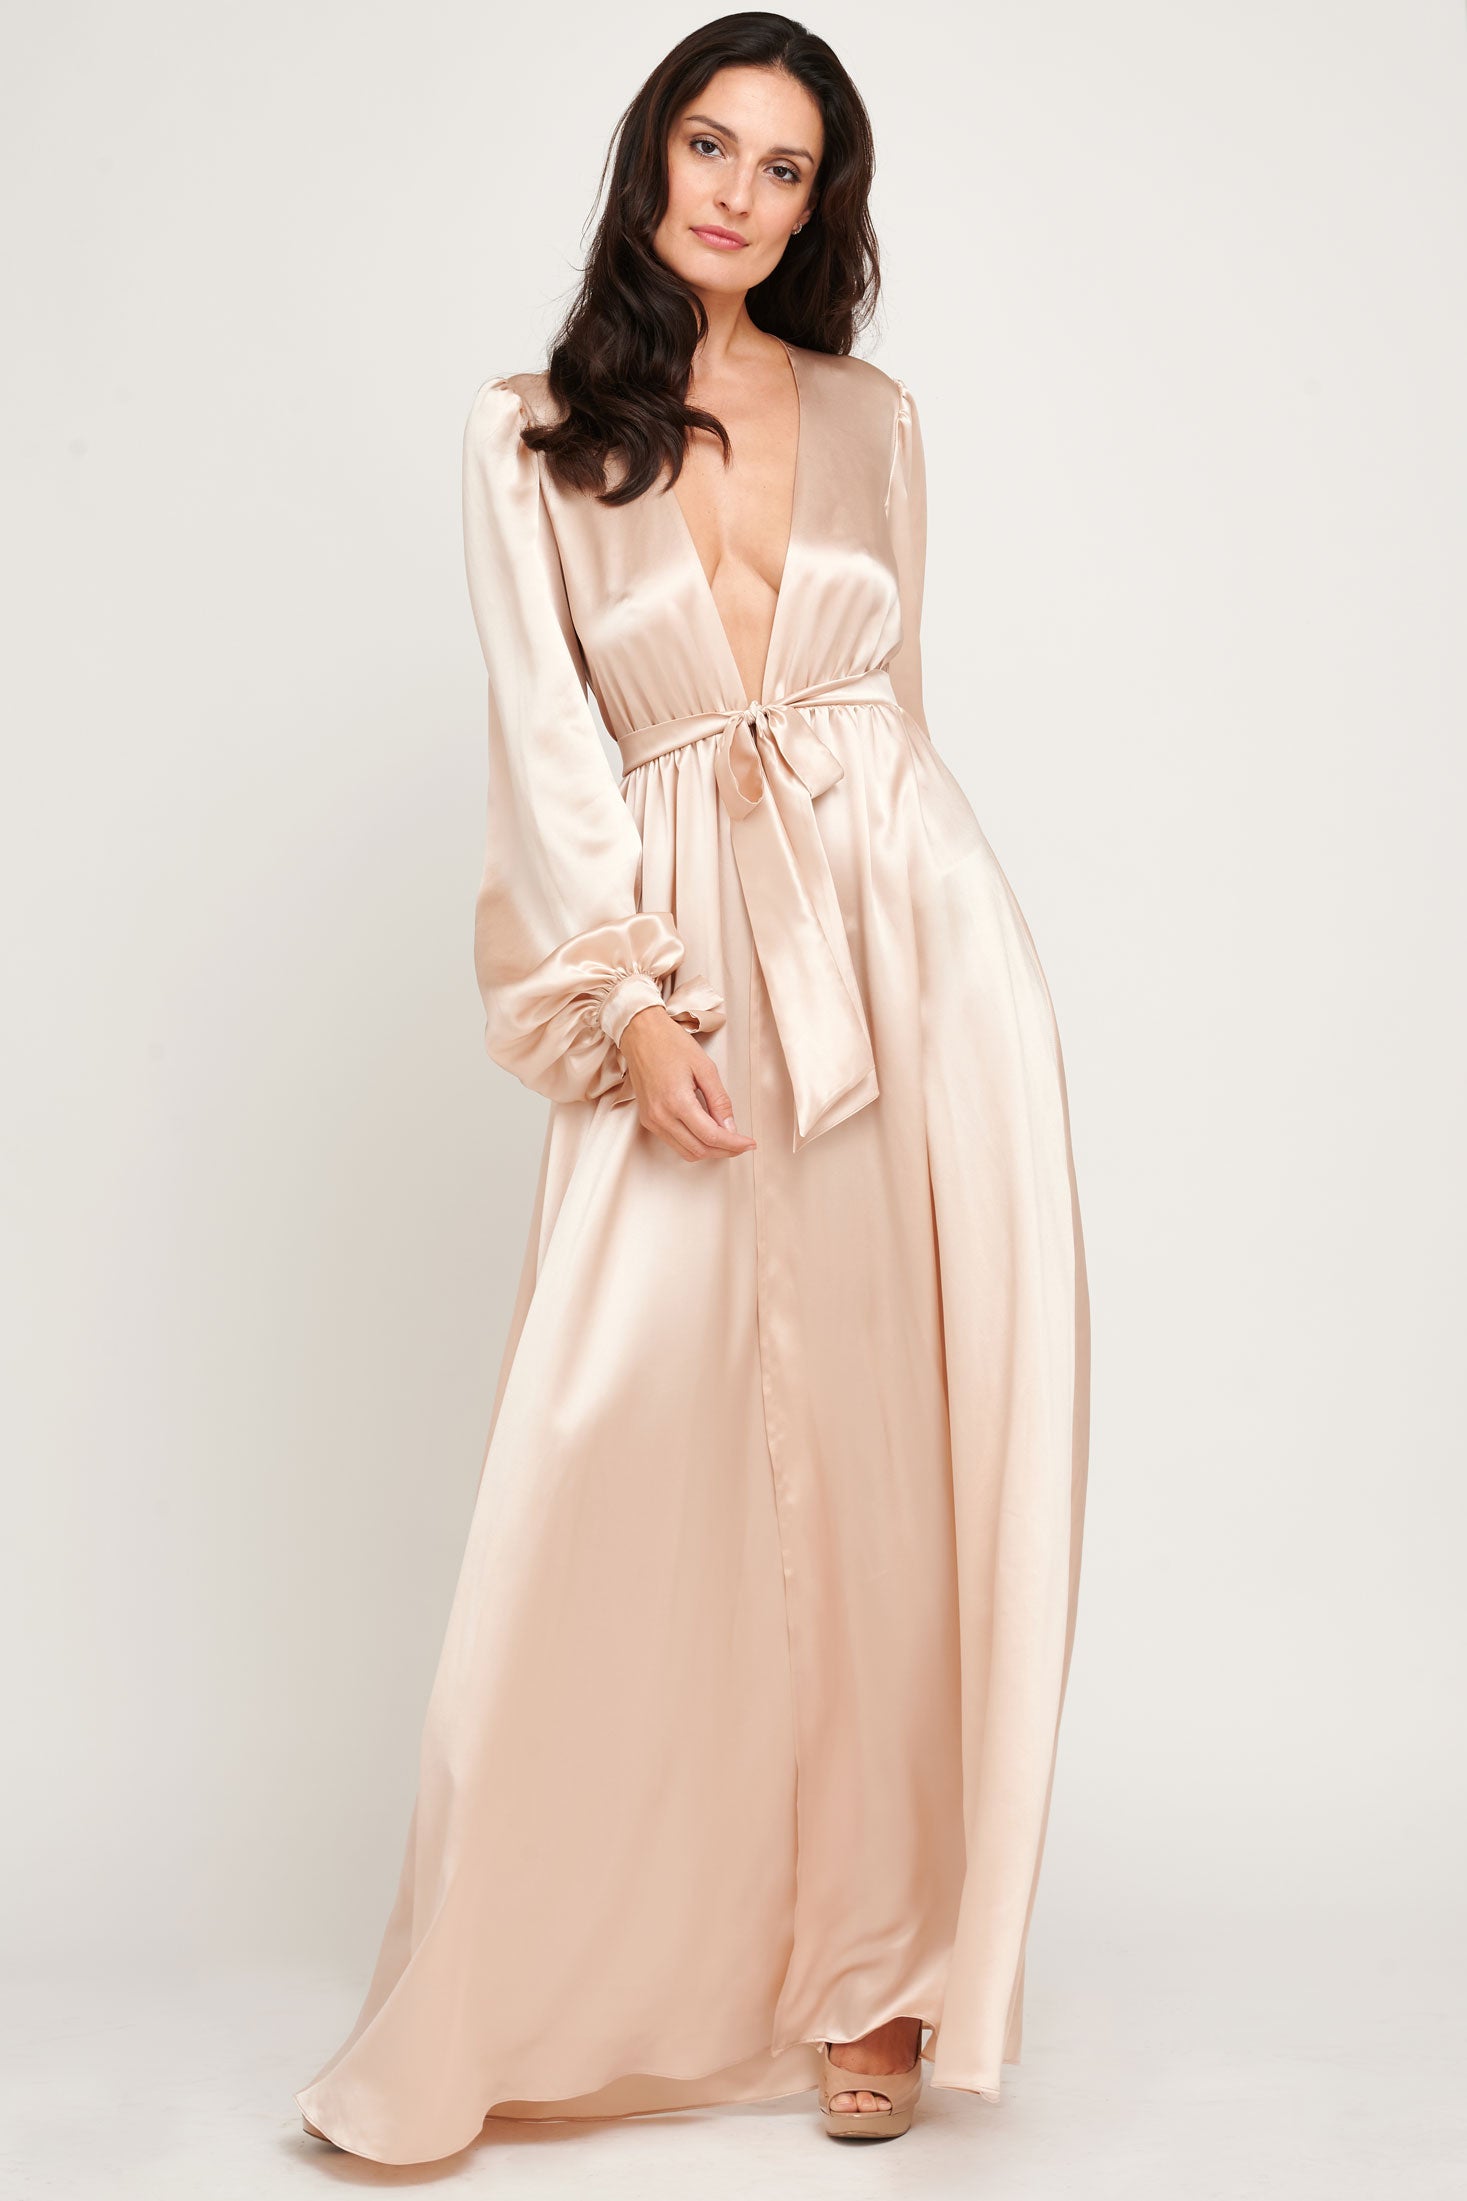 100% silk dressing gowns  Vintage inspired, floor length robes